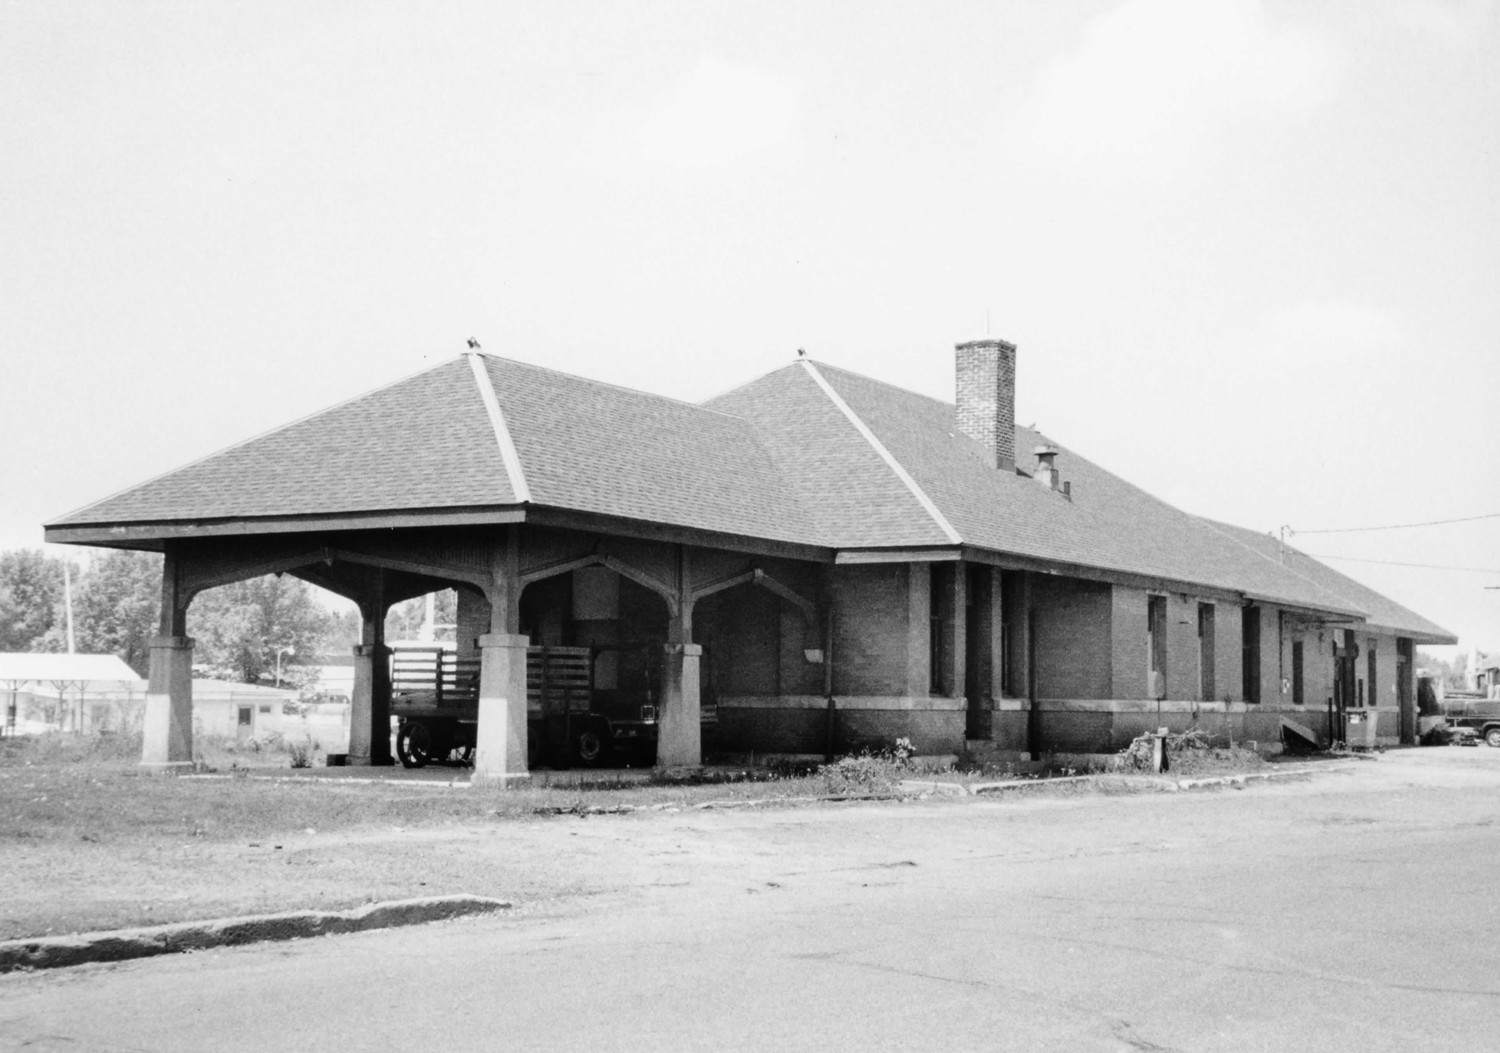 Omaha Station - Rice Lake Depot, Rice Lake Wisconsin Town side, looking northwest (2006)